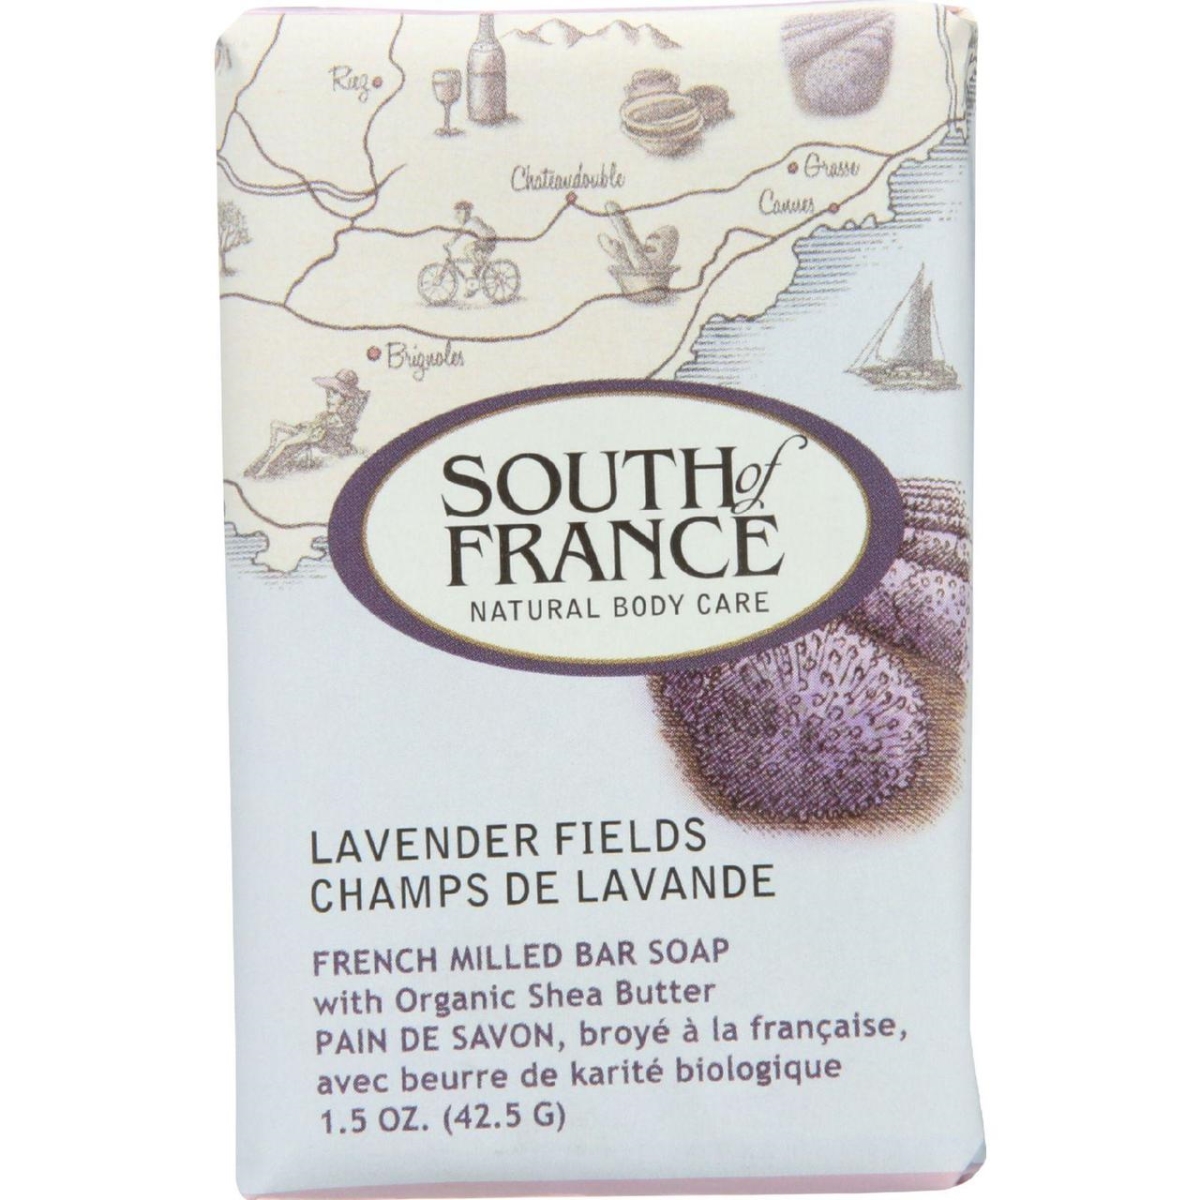 Hg1706357 1.5 Oz Bar Soap Lavender Fields Travel - Case Of 12